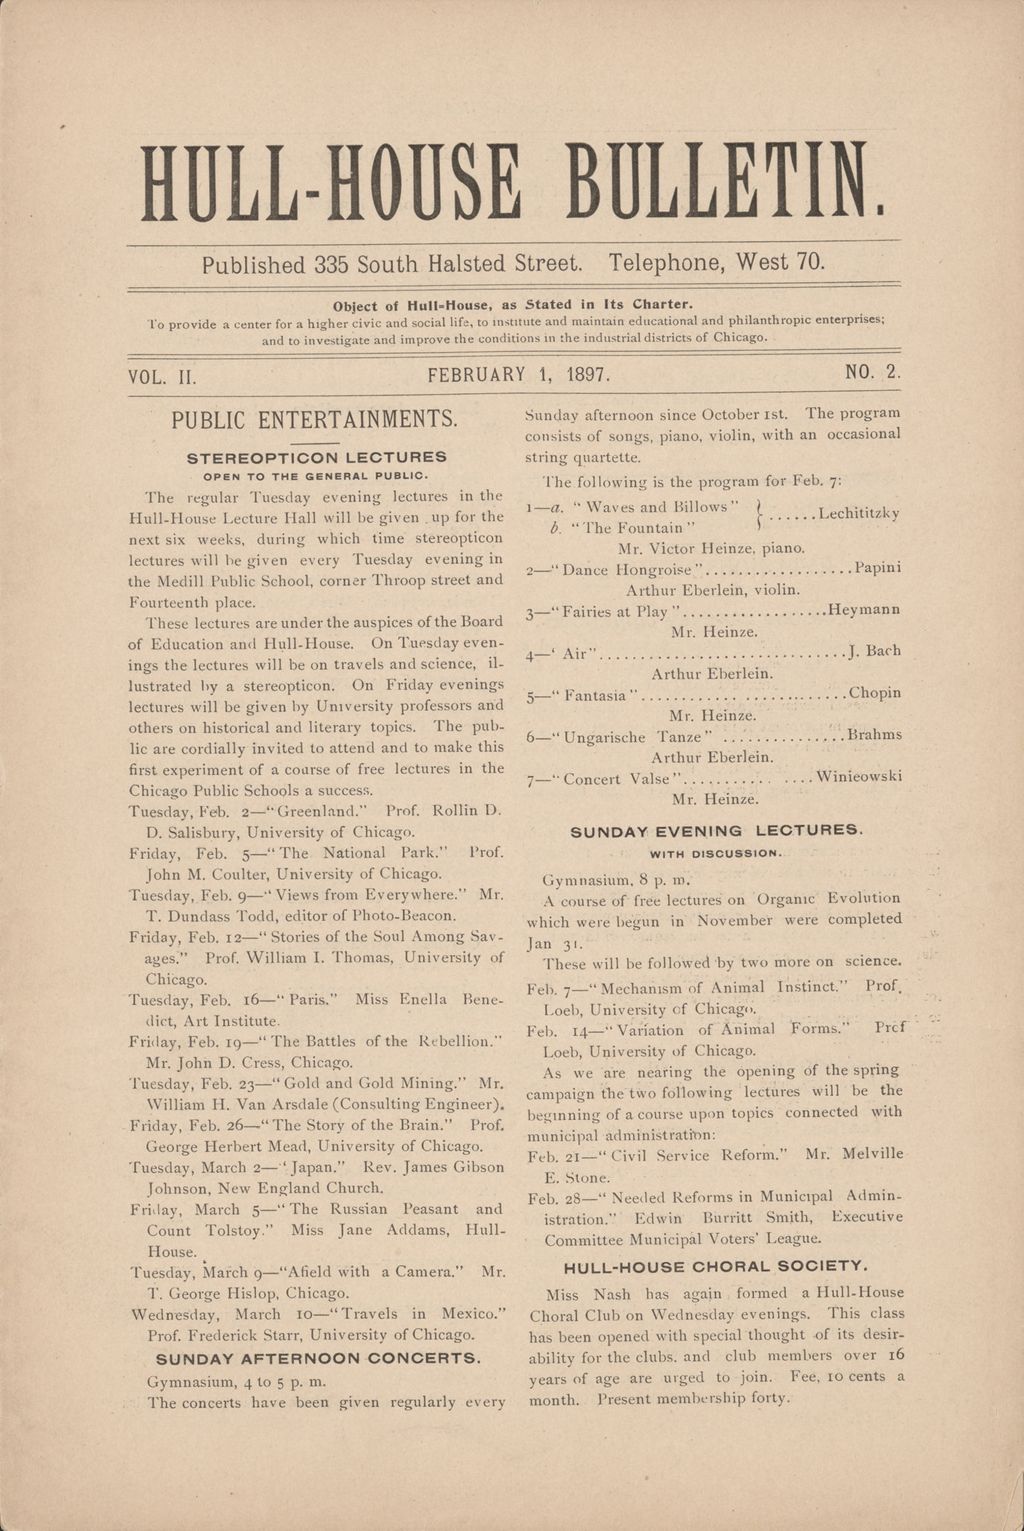 Hull-House Bulletin, vol. 2, no. 2, 1897: Feb. 1